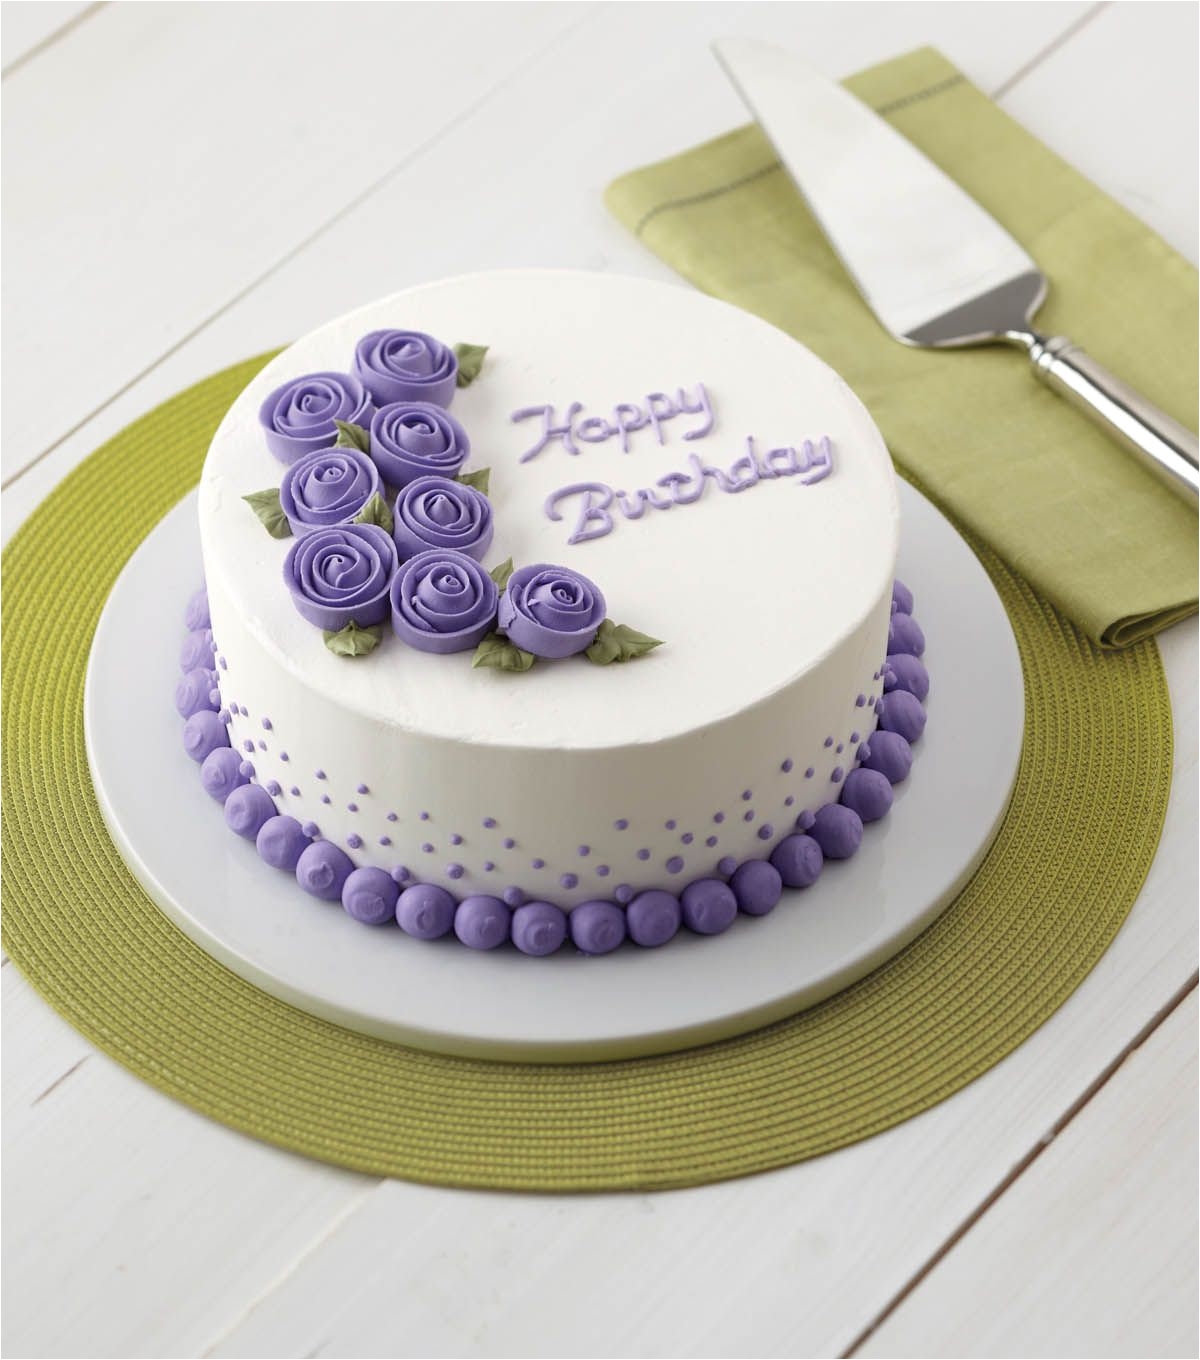 vivid violet roses cake birthday cake wilton cakes